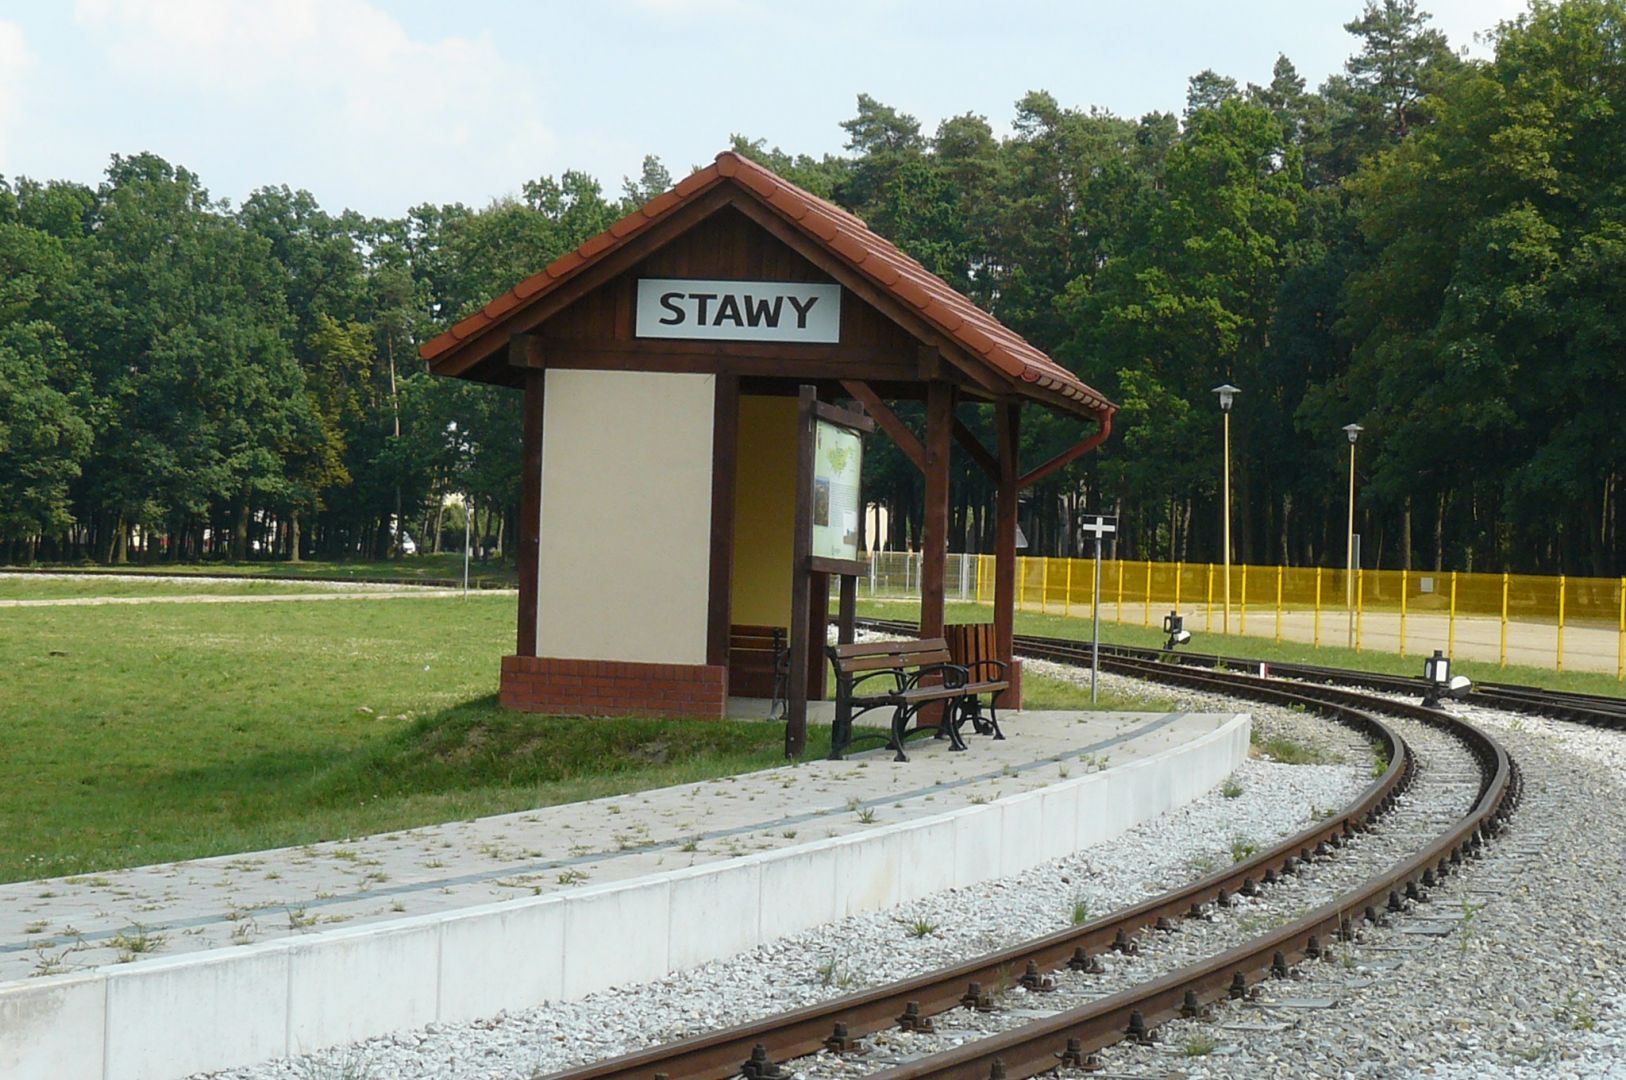 Narrow Gauge Krośnicka Railway